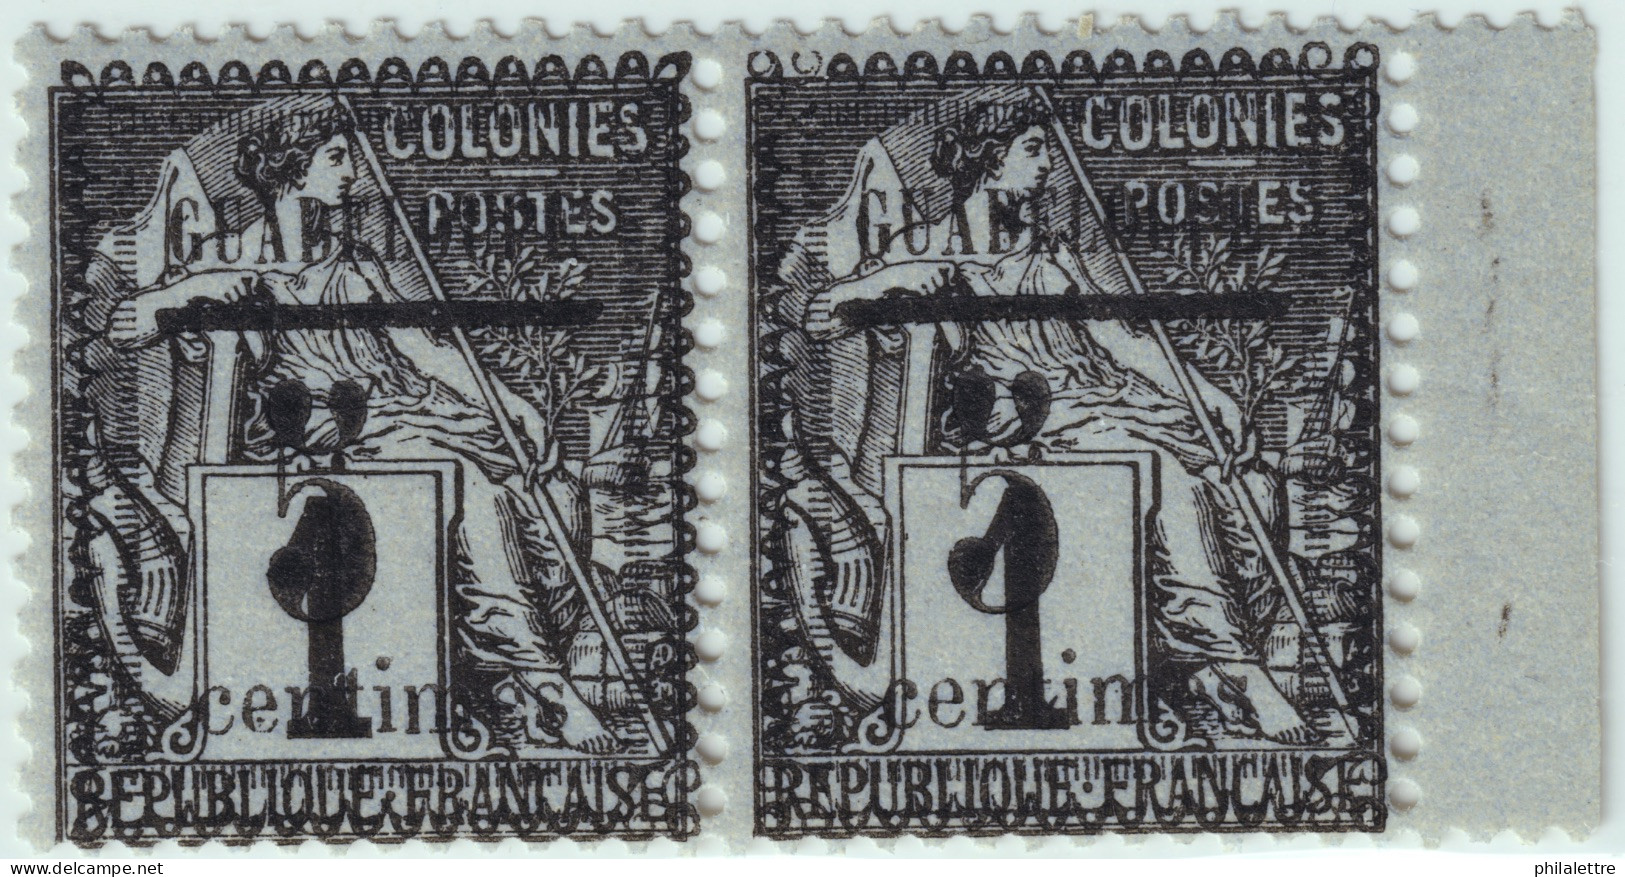 GUADELOUPE - 1889 - Yv.6 En Paire - Type I / Cadre Type IX & XI - Neufs ** - Ungebraucht